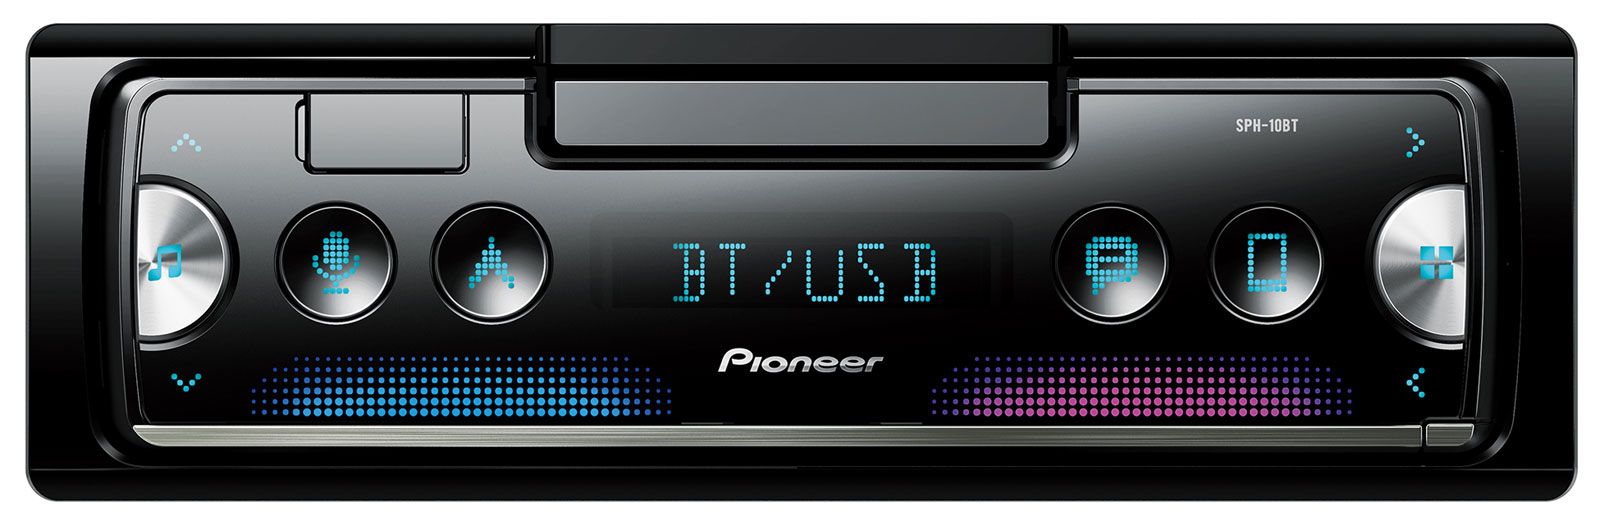 bis 2003 caraudio24 Pioneer SPH-10BT MP3 AUX Bluetooth USB Autoradio f/ür Skoda Fabia